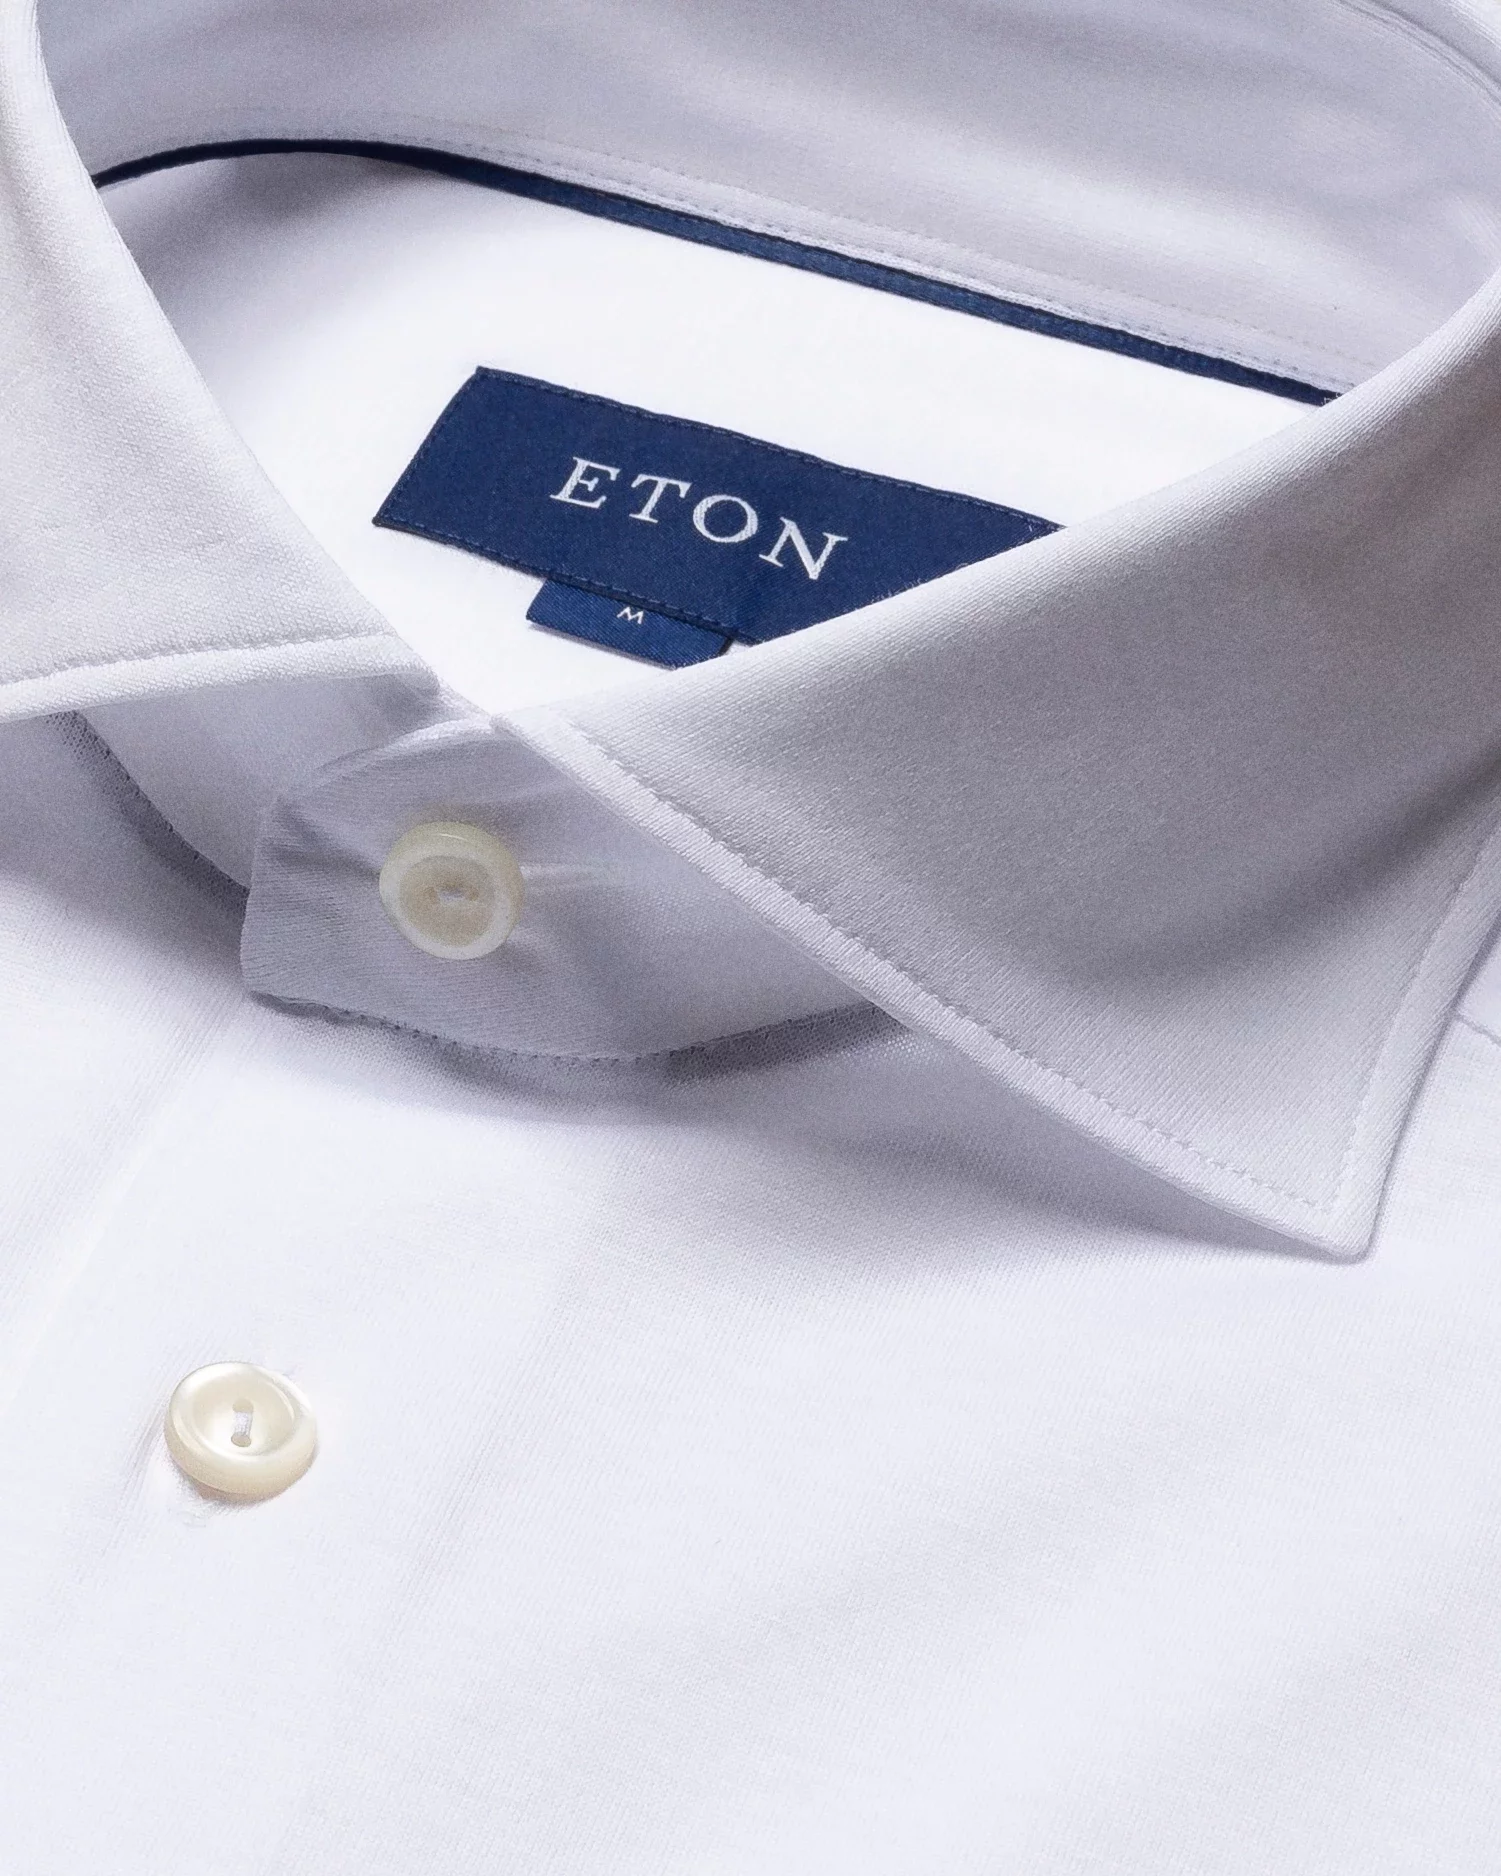 Eton - white jersey